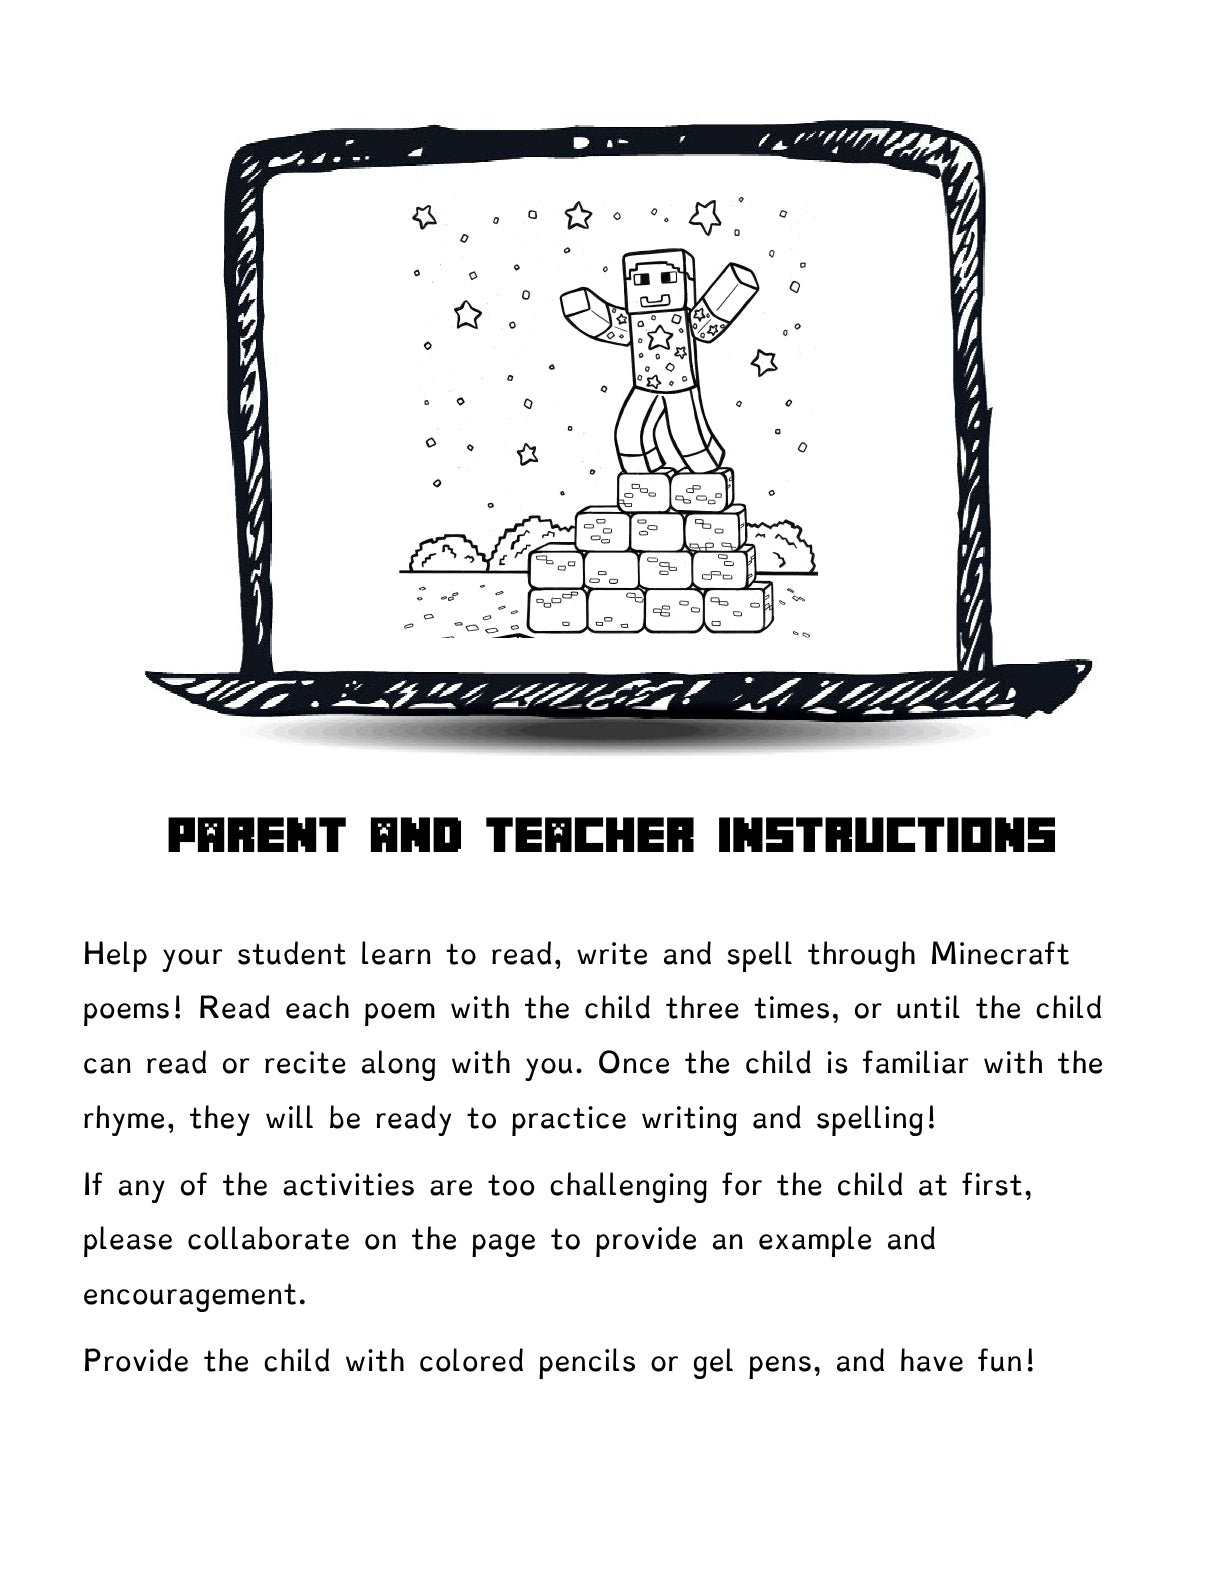 (Age 7+) Spelling Time Minecraft Workbook